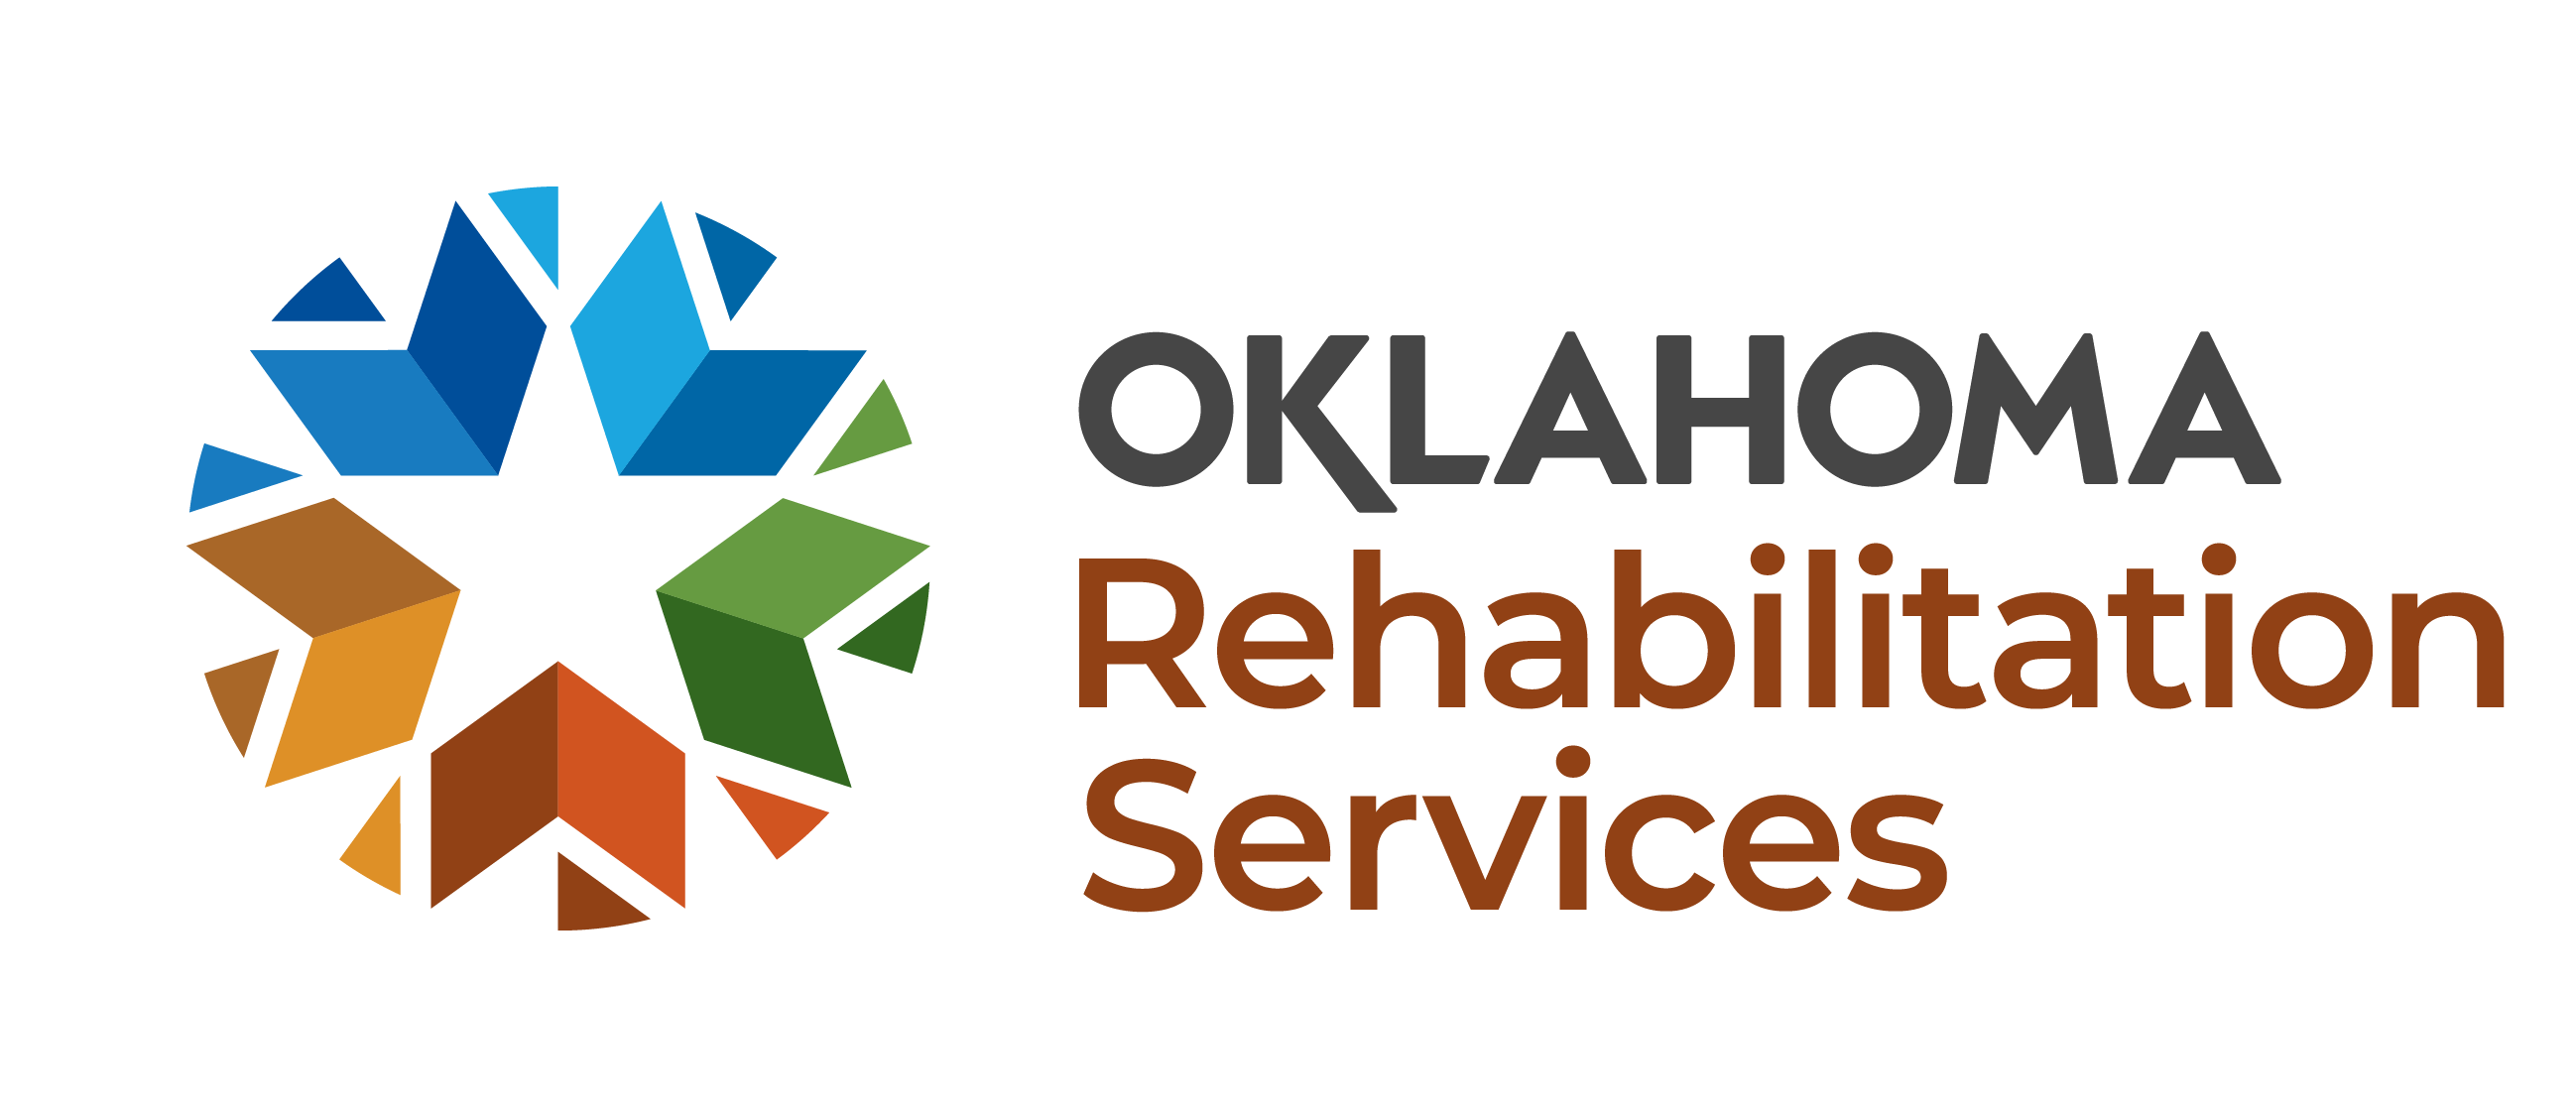 Oklahoma Department of Rehabilitation Services logo.